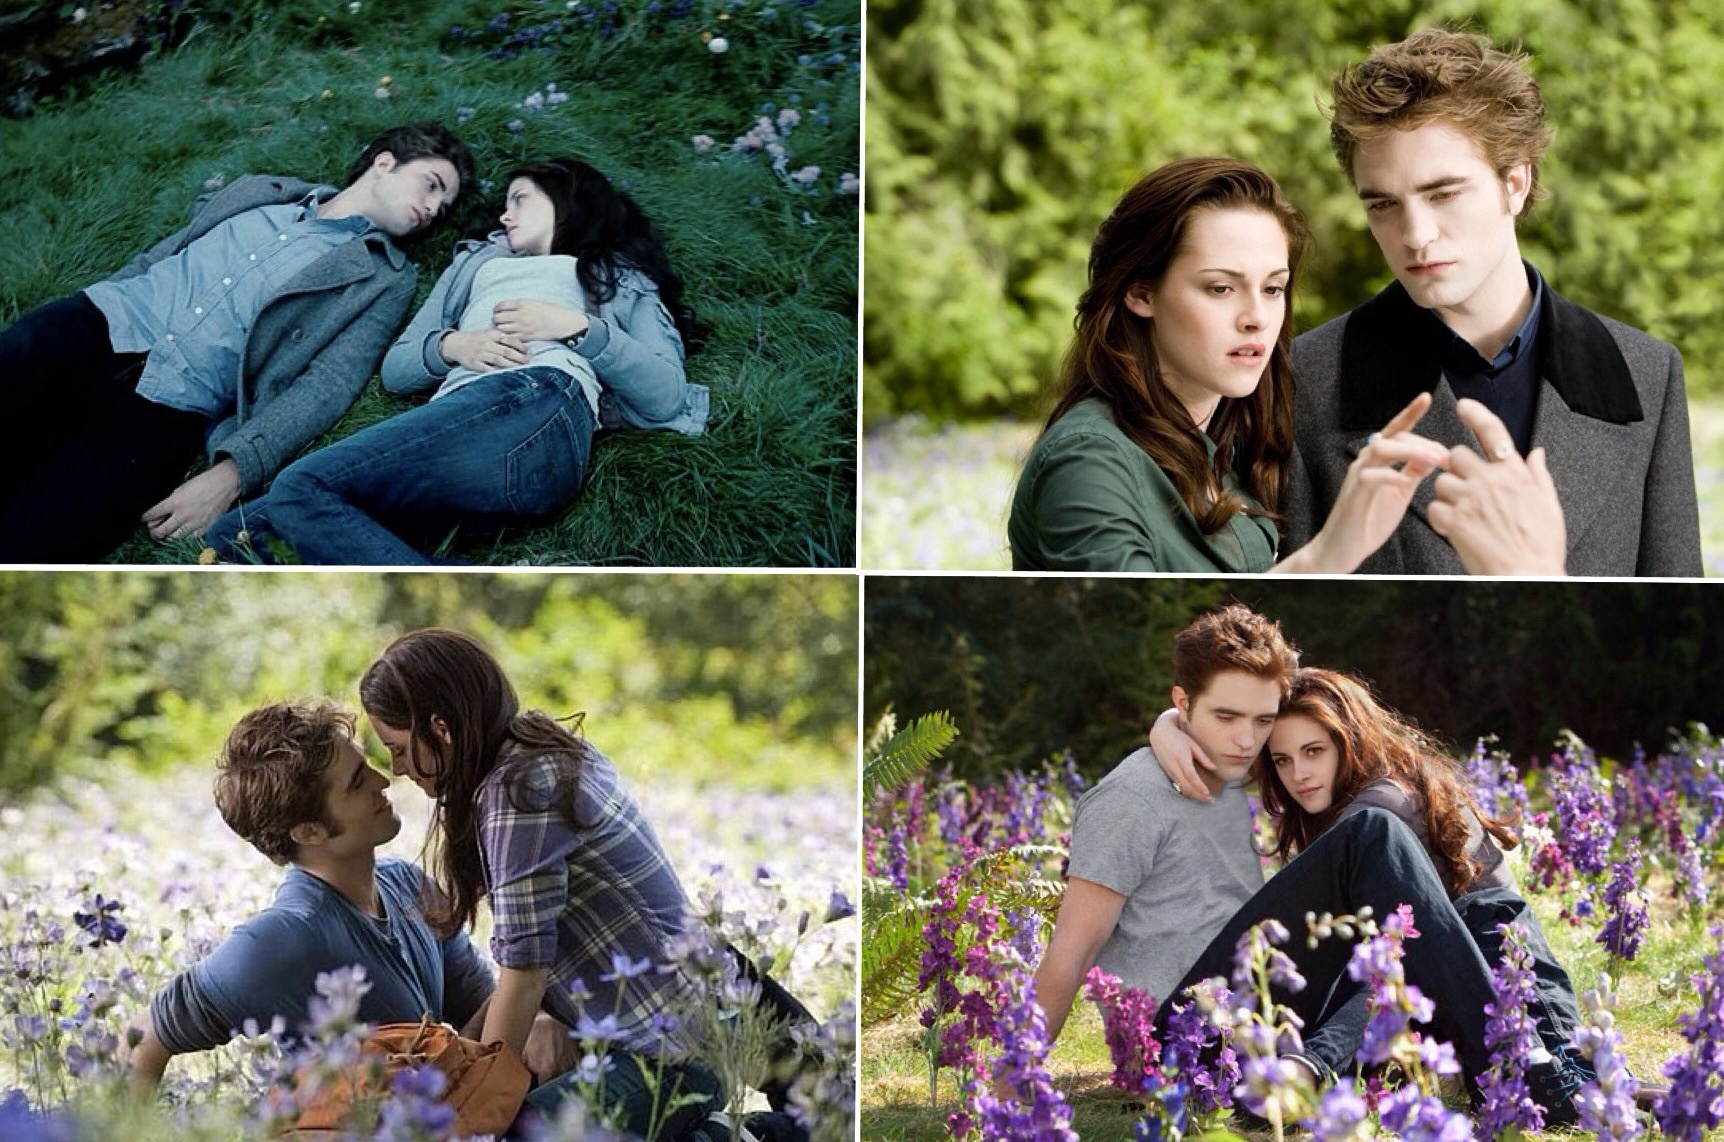 Twilight Series Images on Fanpop.